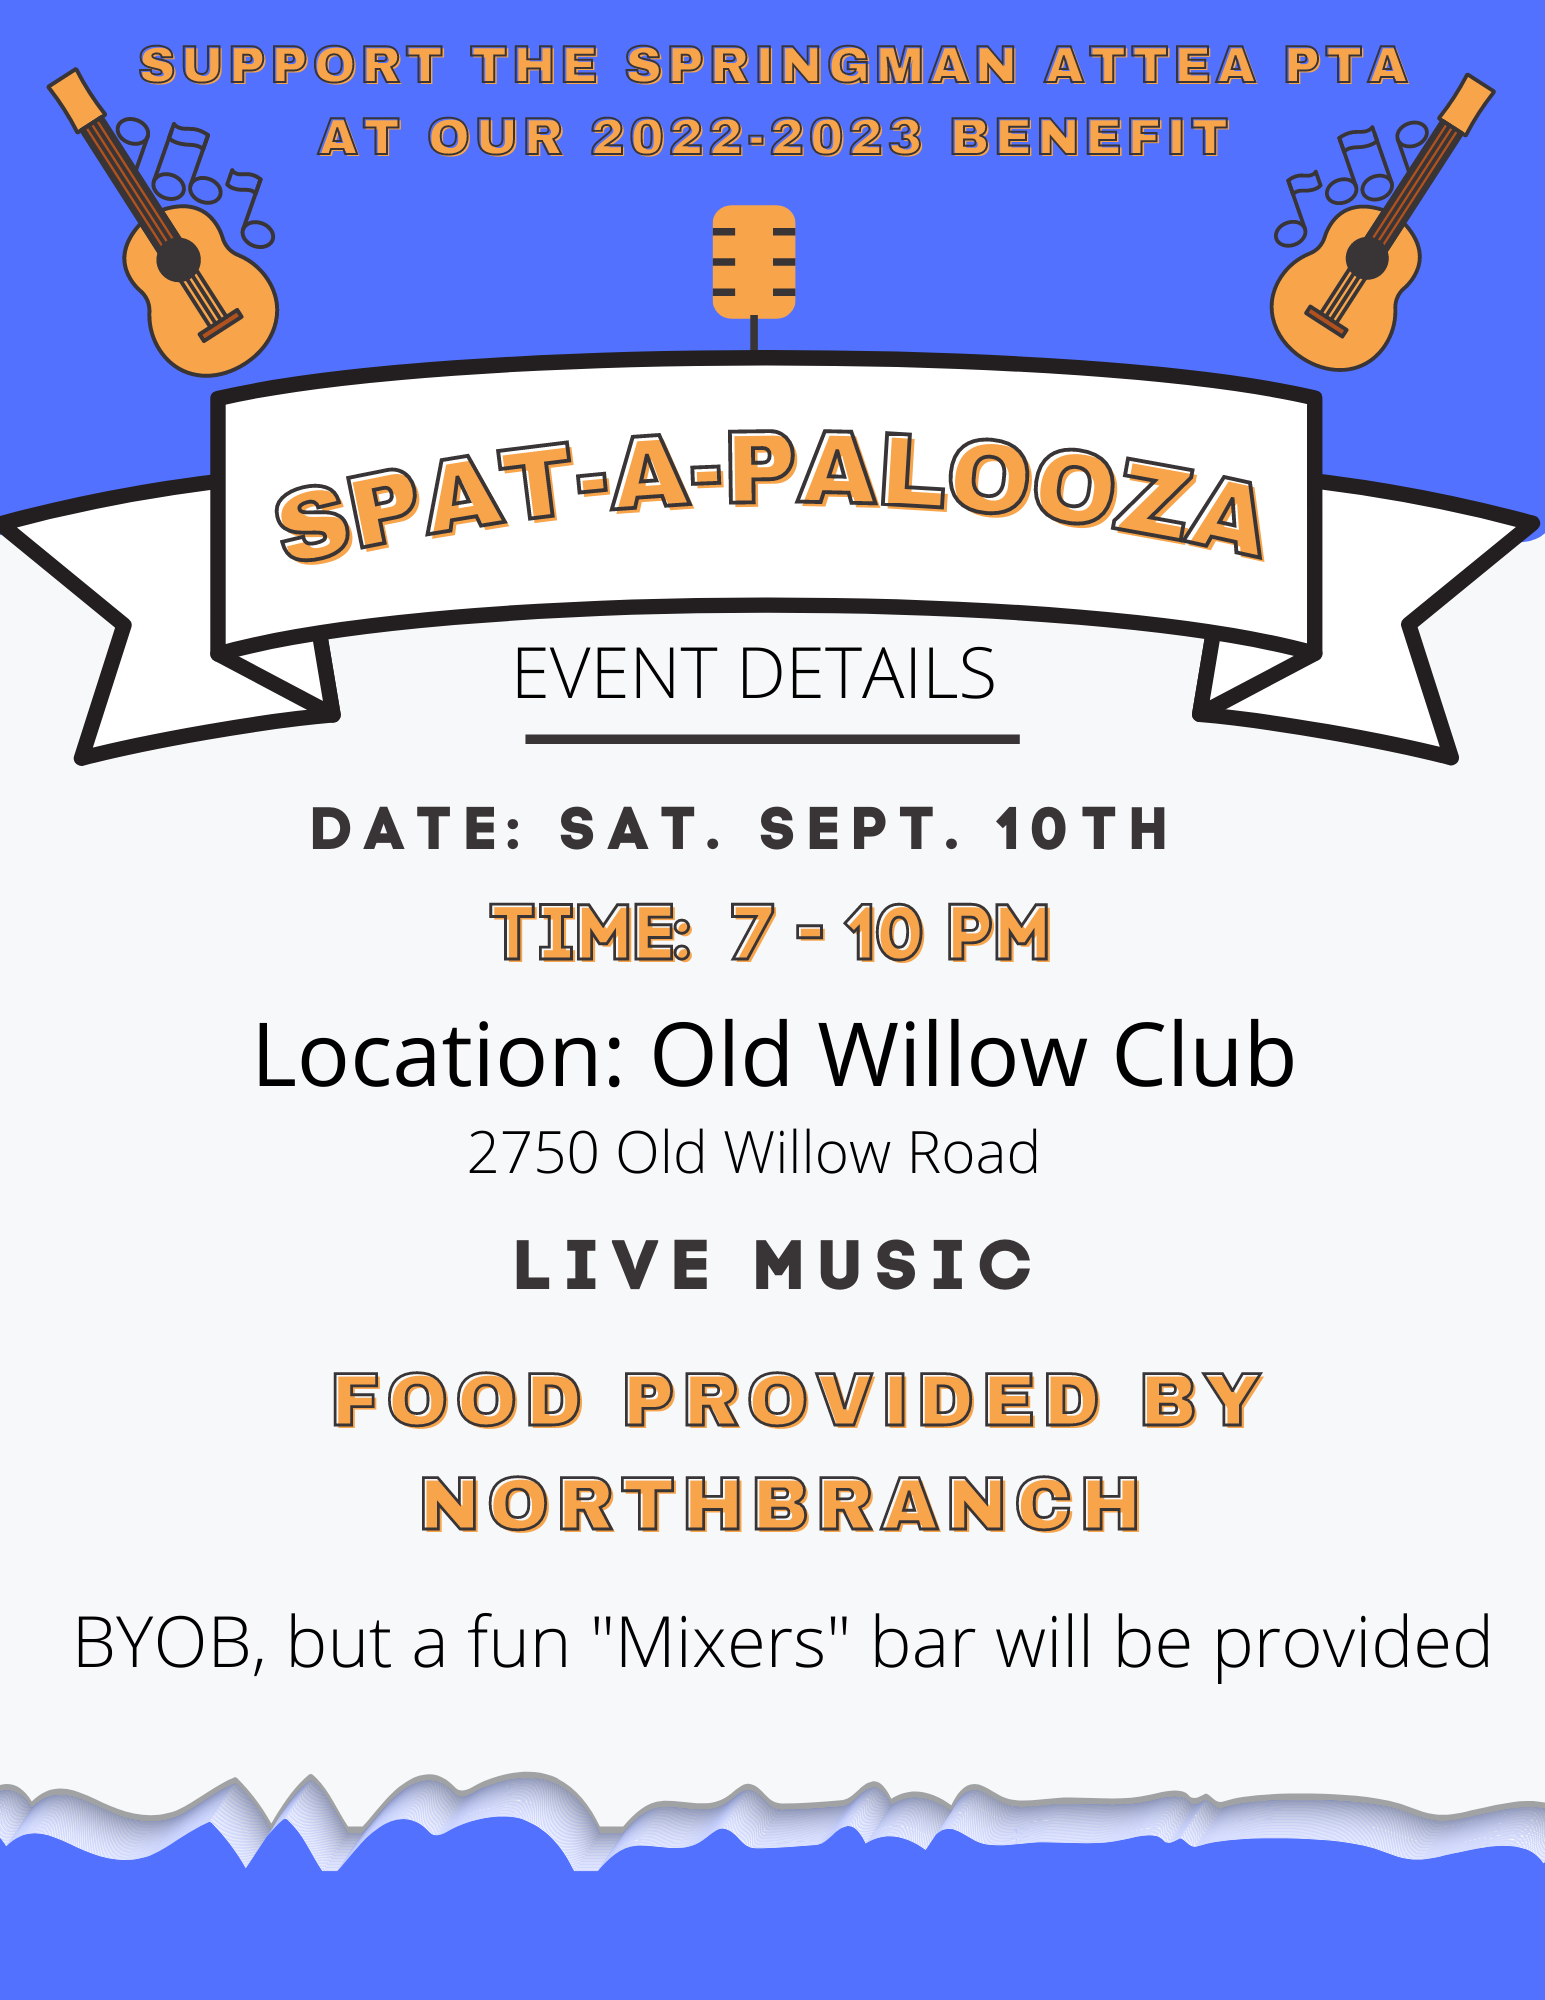 Spat-A-Palooza Info, Sept 10, 2022, 7-10 pm, live music, food from NorthBranch, BYOB but enjoy mixer bar,